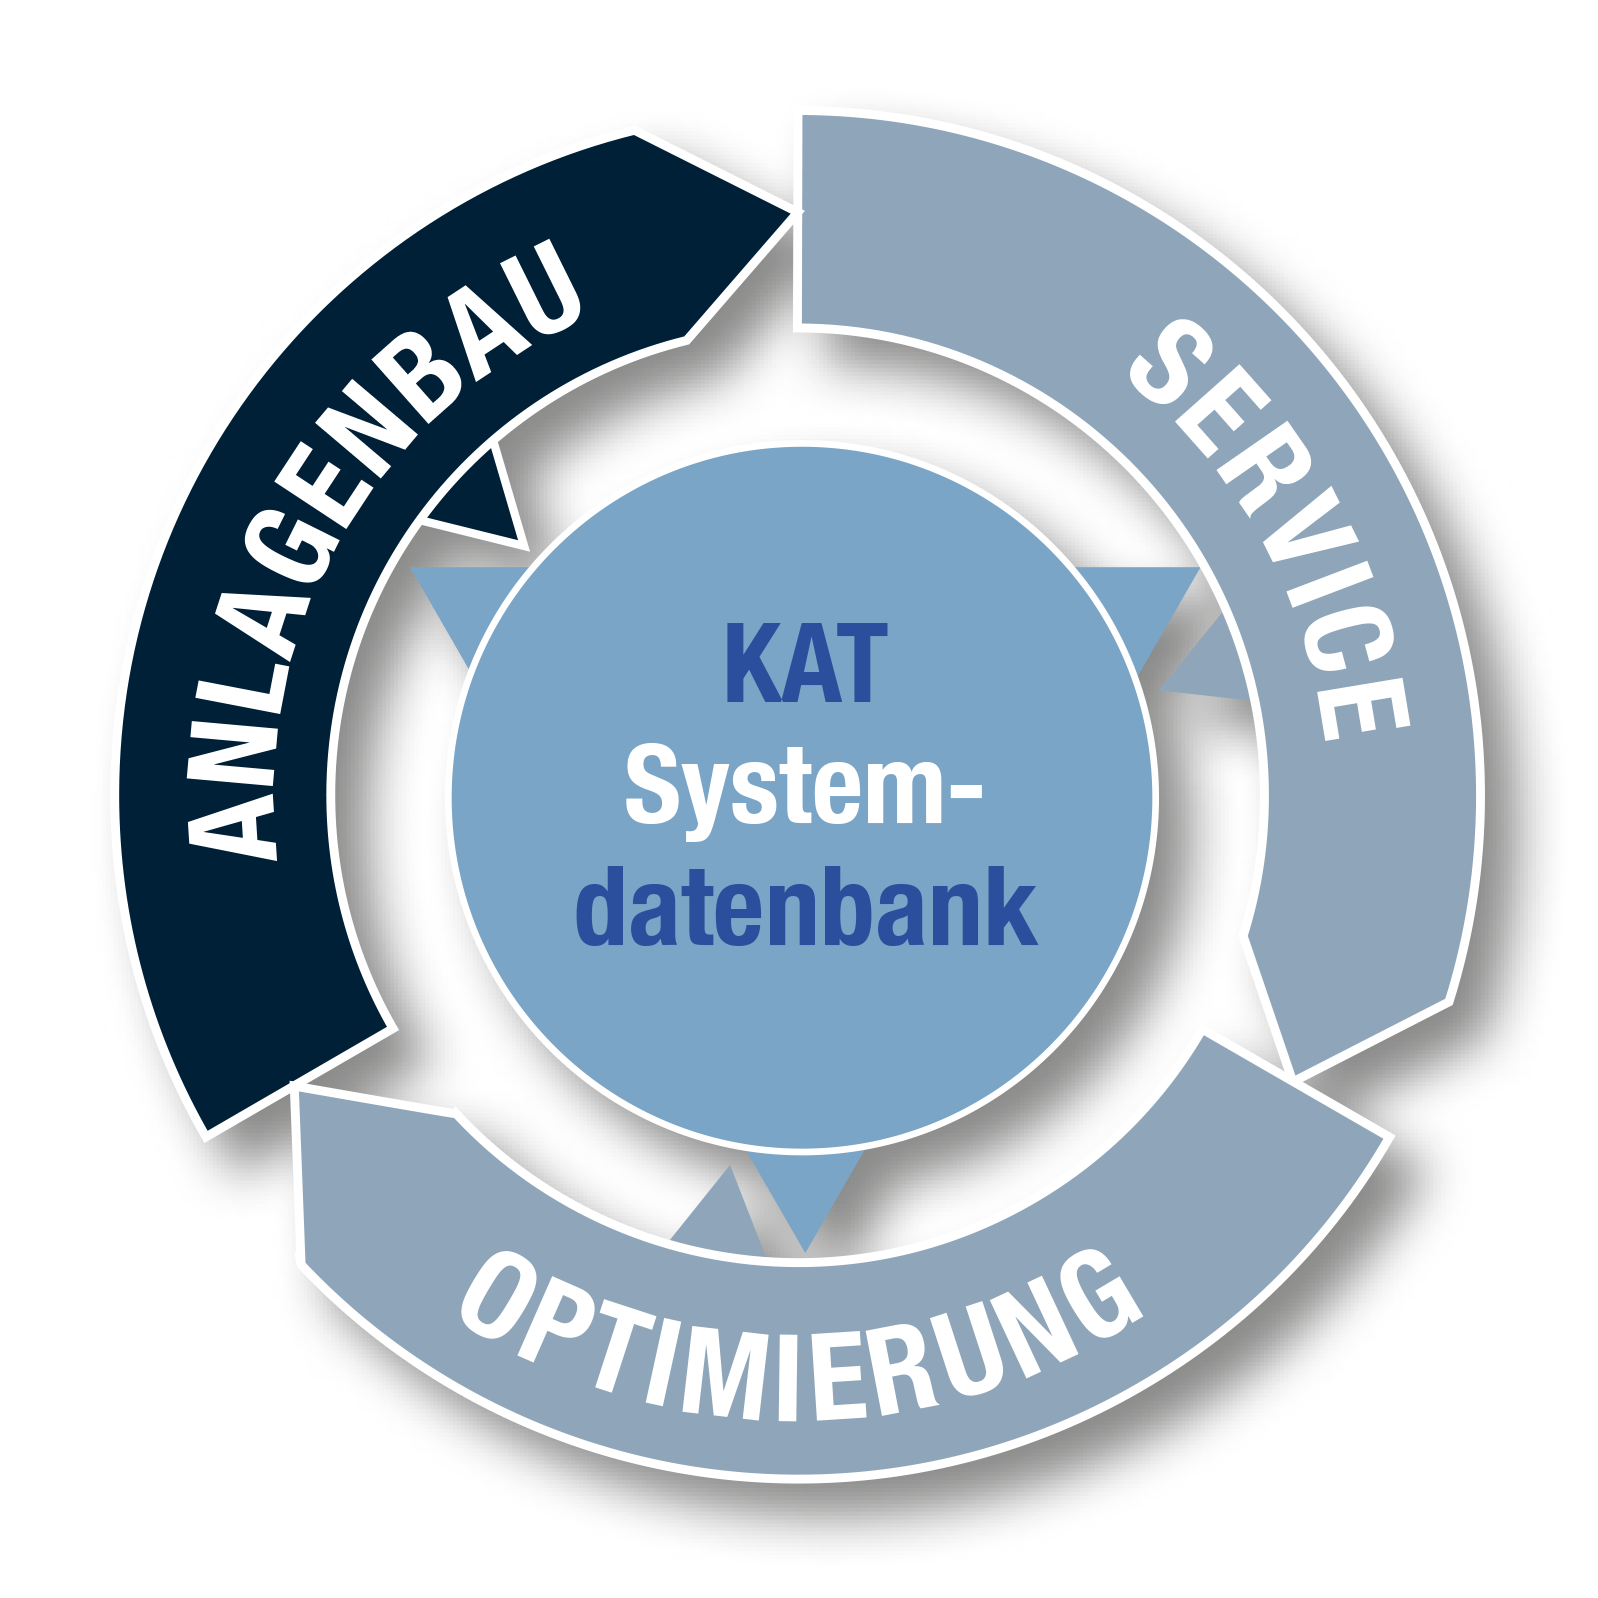 KAT System-datenbank